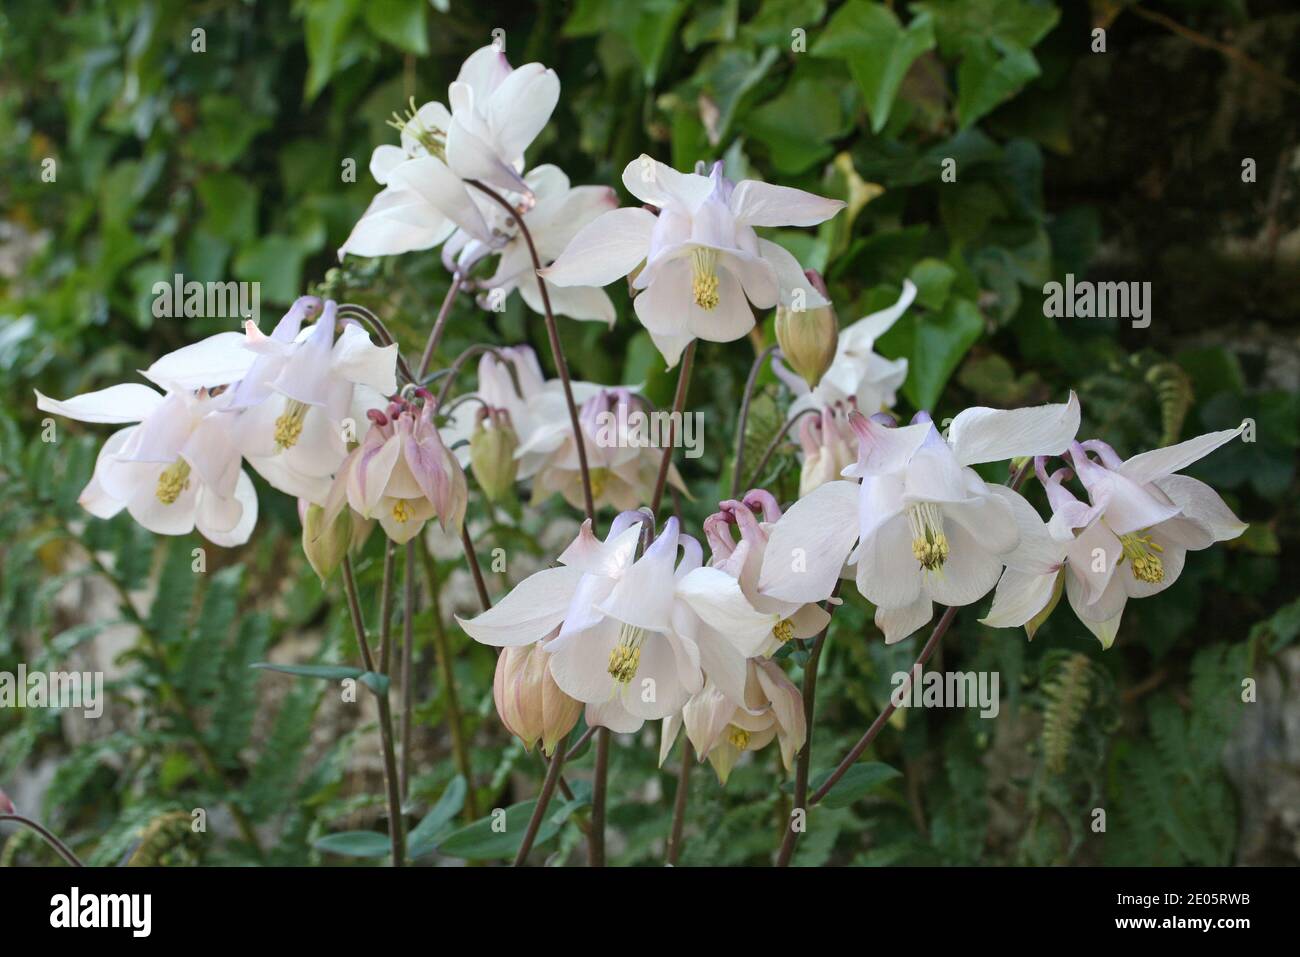 White Flowers of Granny's Bonnets a.k.a. Columbine - Aquilegia Stock Photo